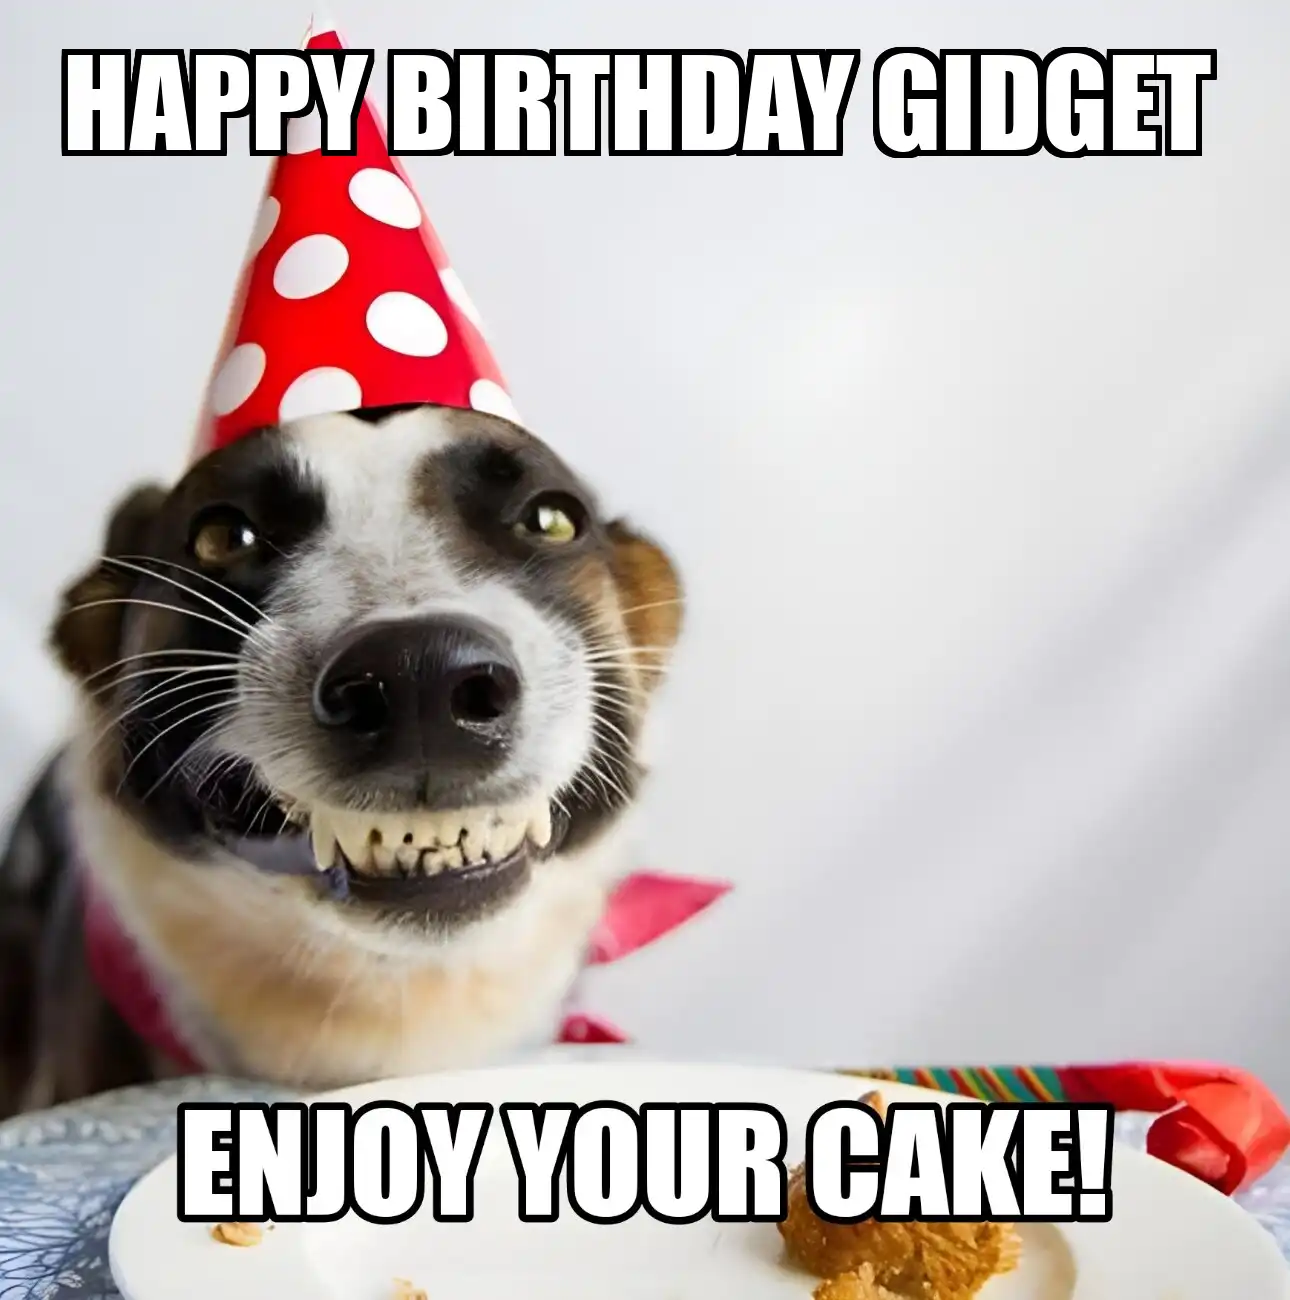 Happy Birthday Gidget Enjoy Your Cake Dog Meme